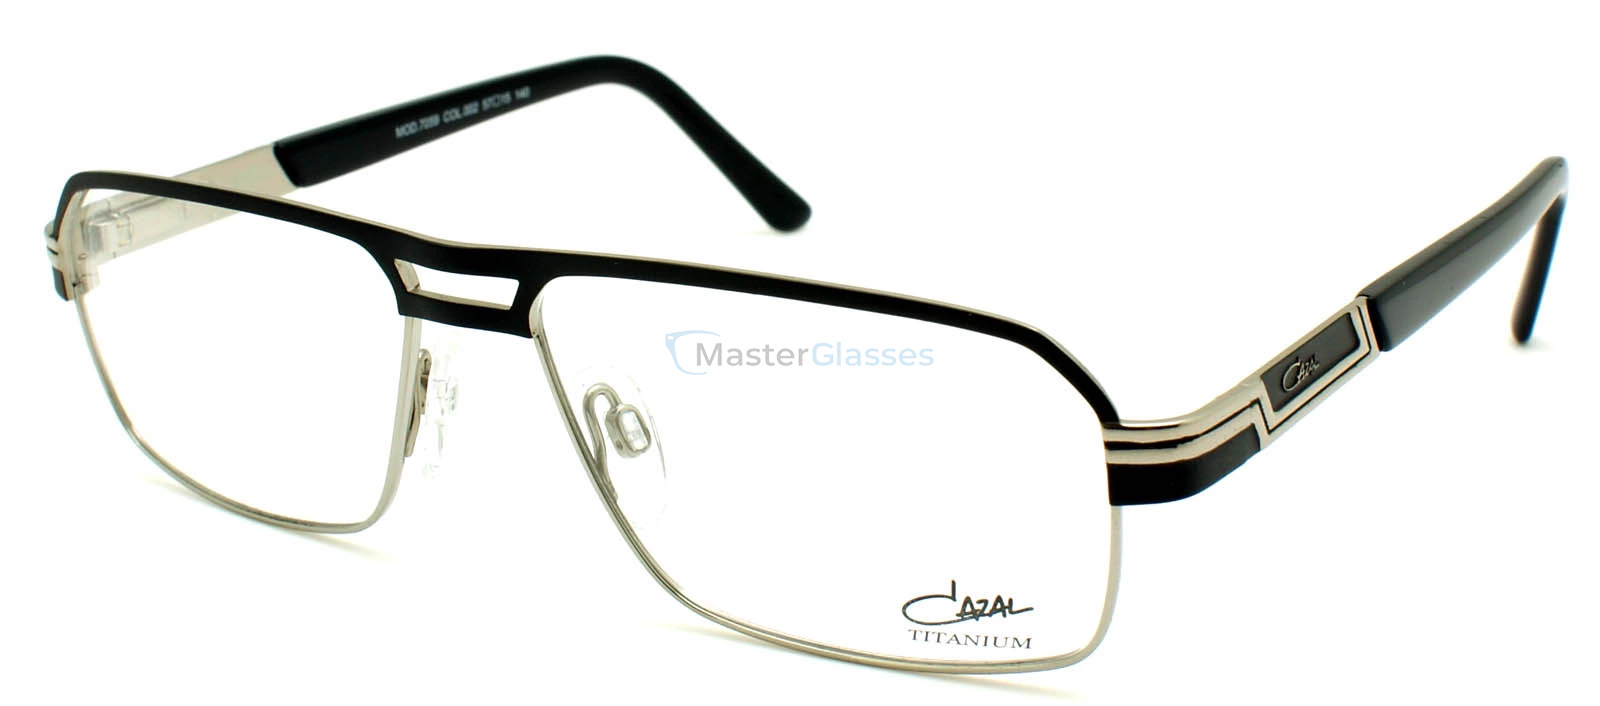 Оправа Cazal 7059 002 57/15 - купить в оптике MasterGlasses